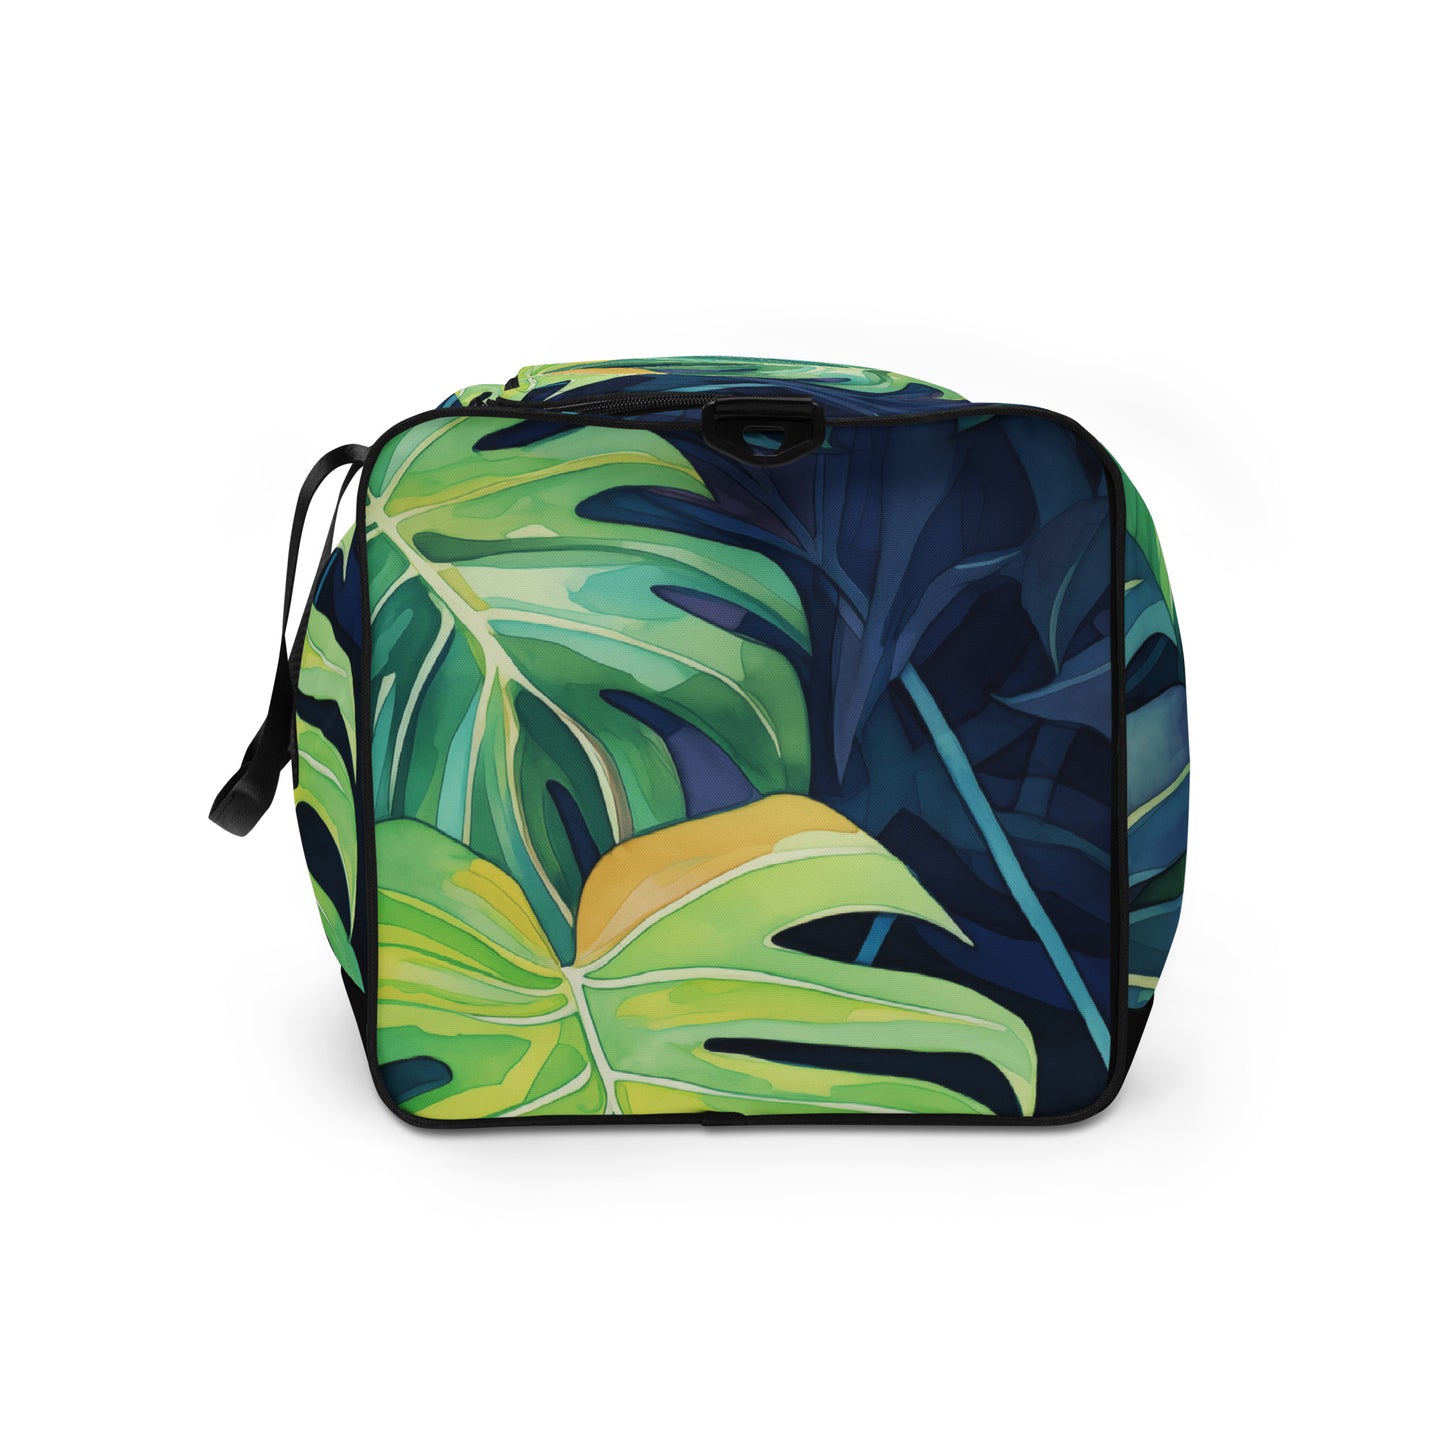 Tropical Gardens 3 Duffle Bag